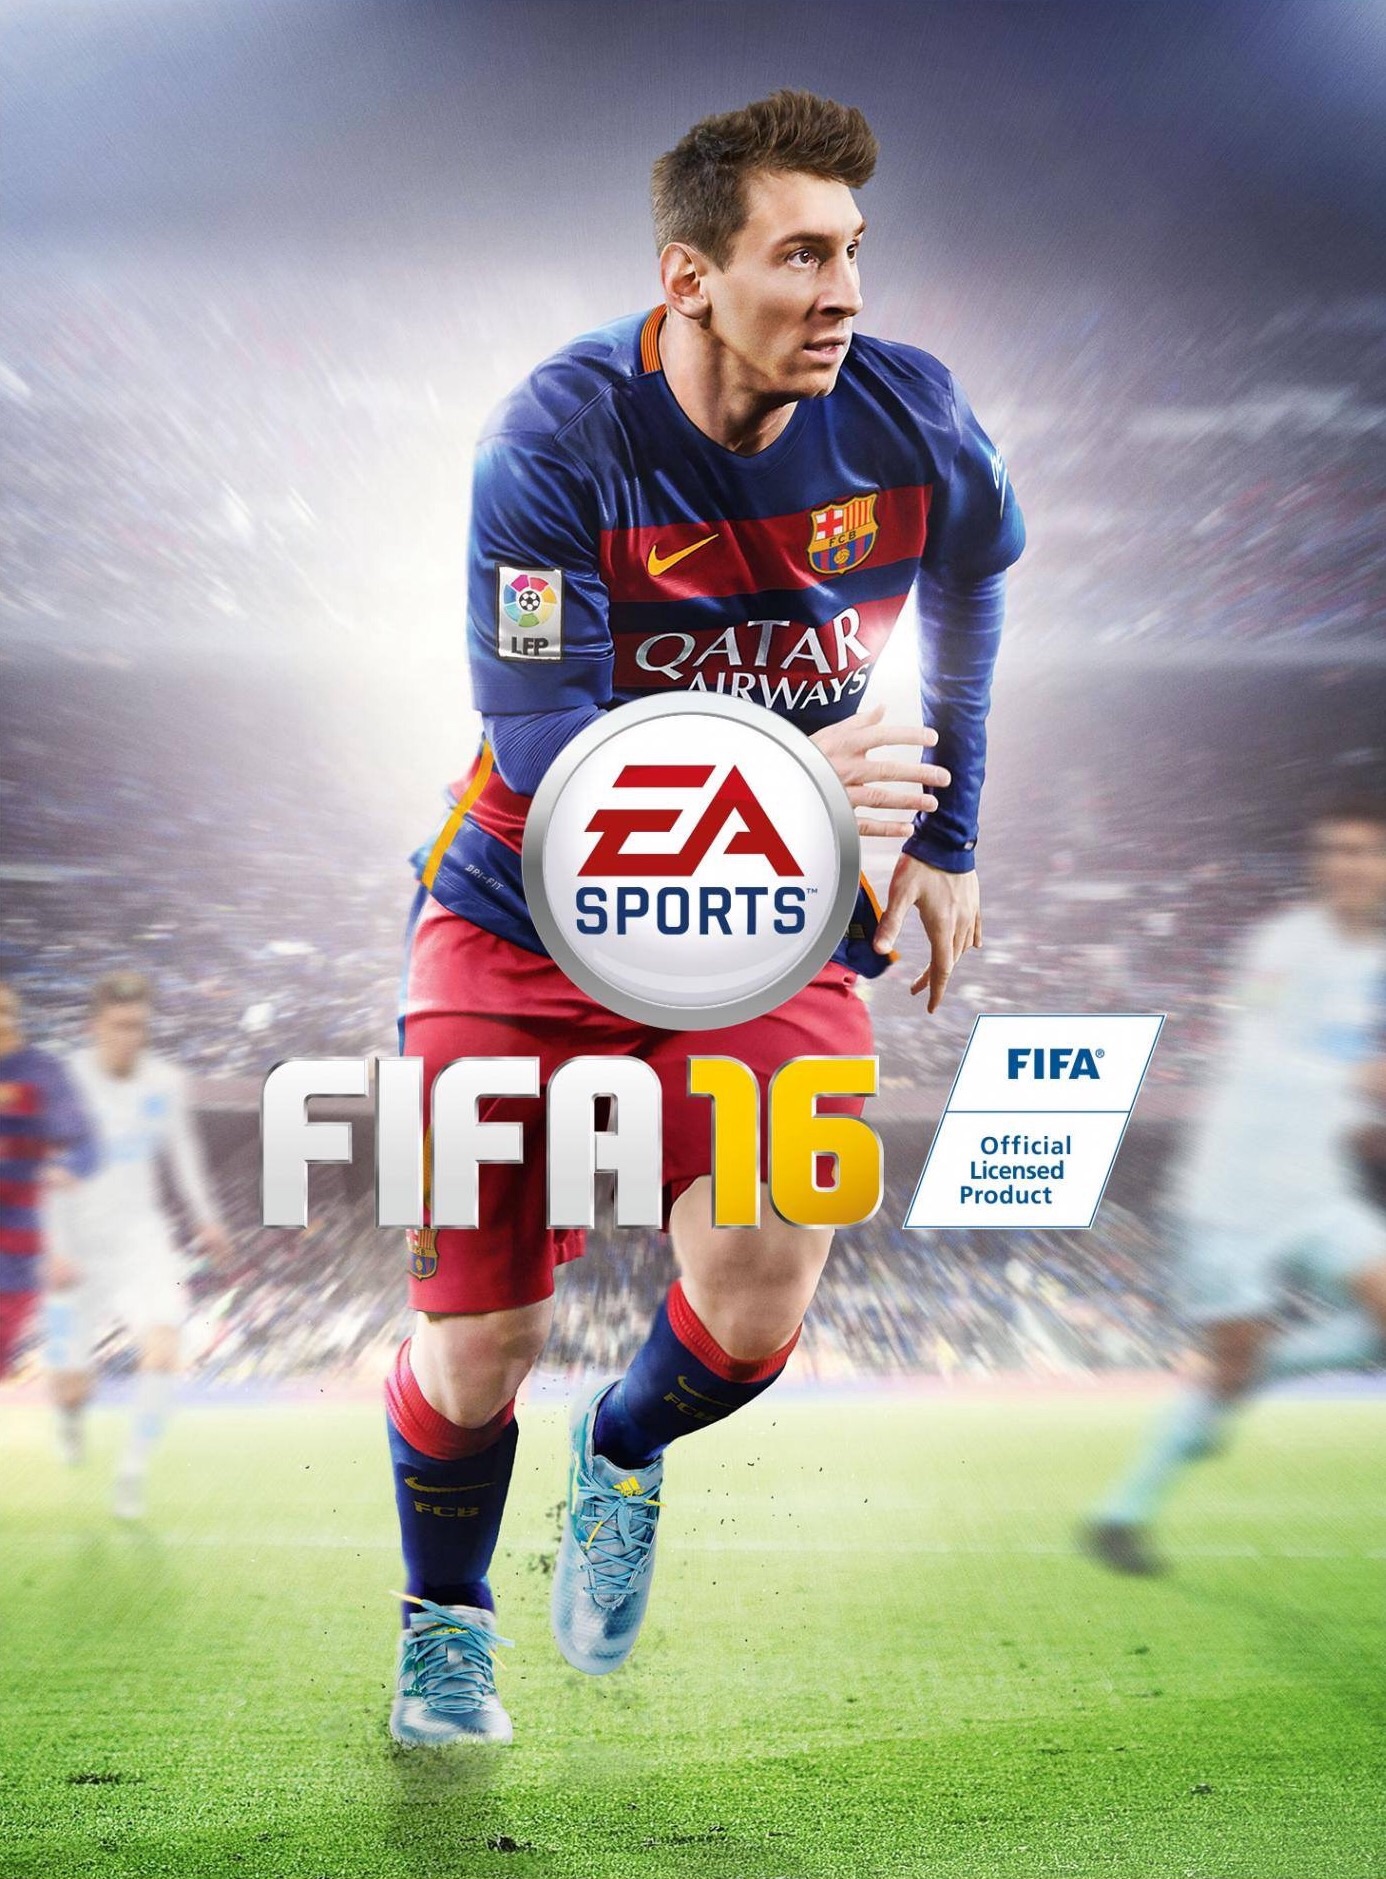 FIFA 16 - Wikipedia